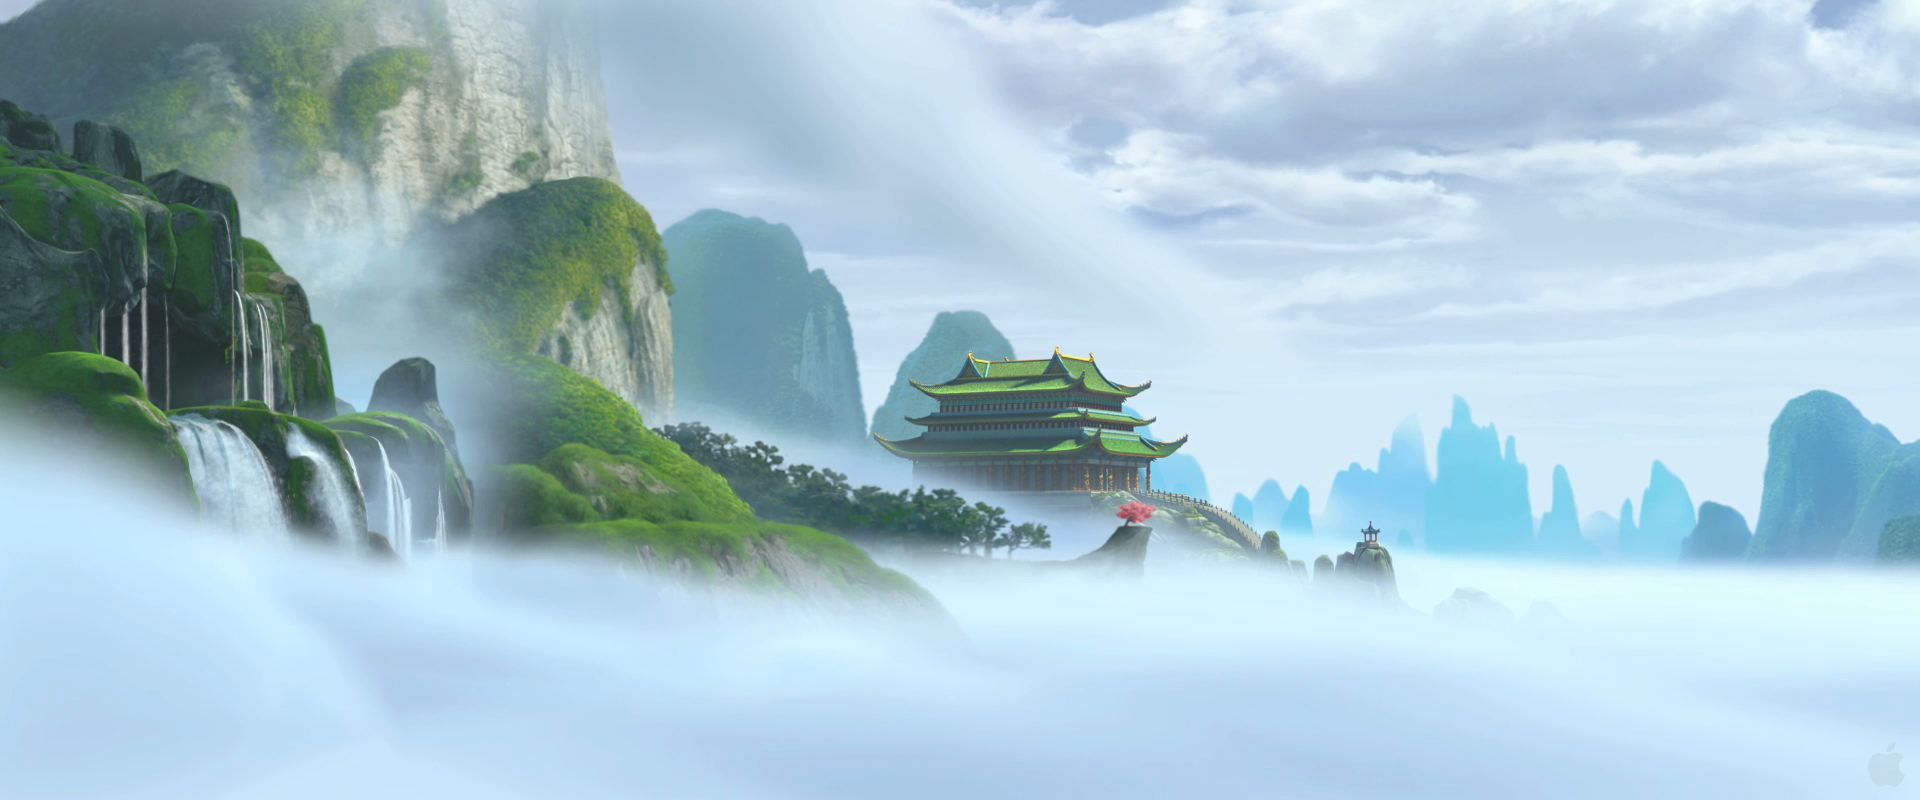 Image result for kung fu panda background. Kung fu panda, Panda background, Fantasy art landscapes